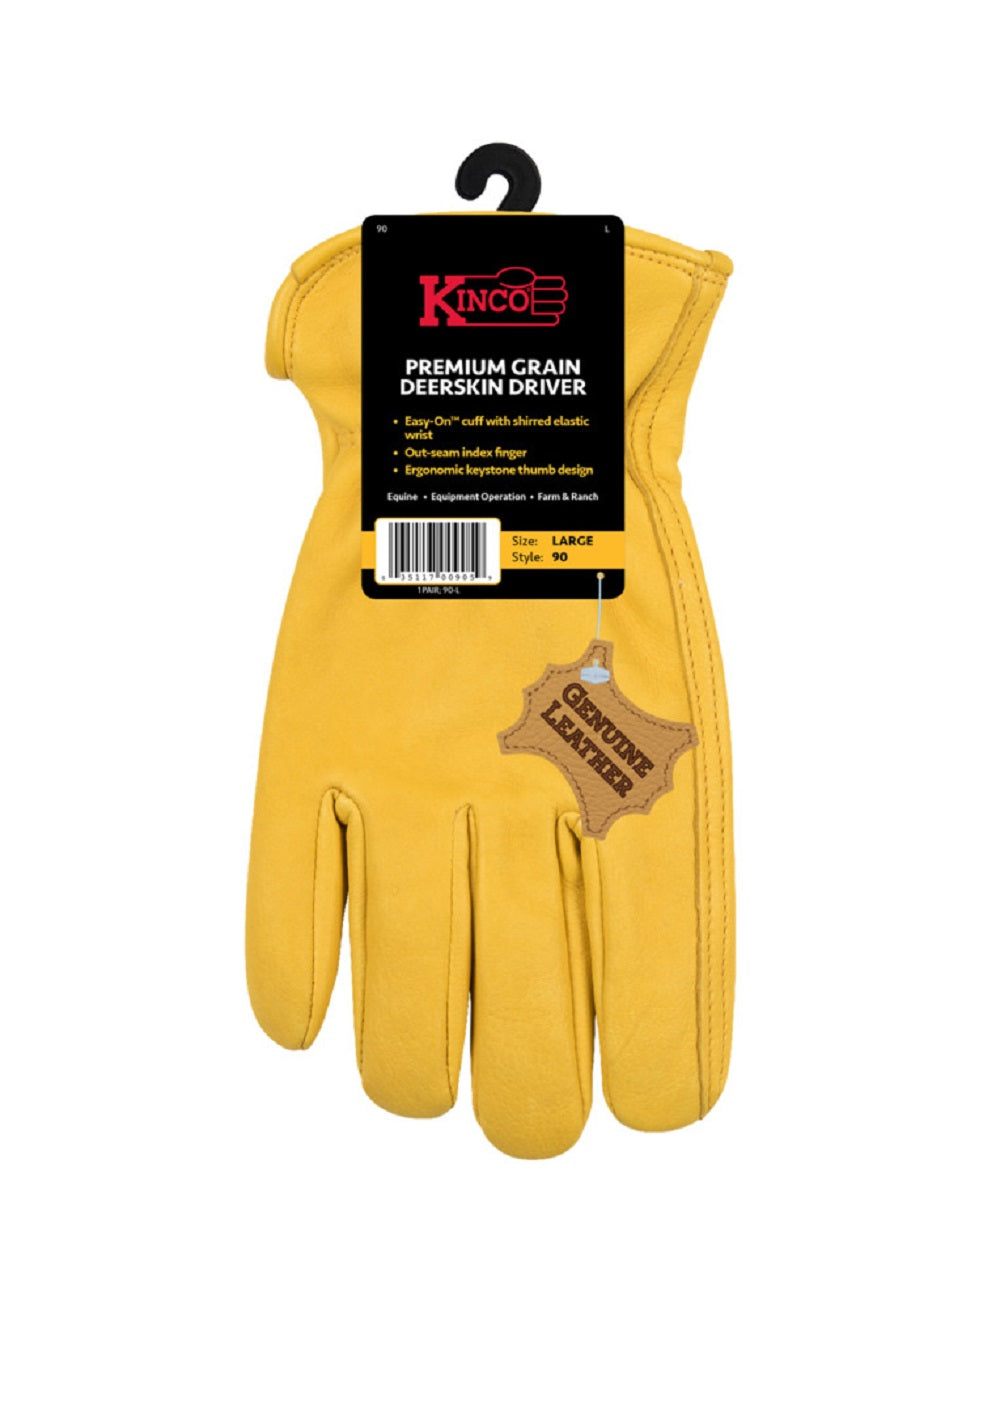 Kinco 90-M Gold Deerskin Driver Gloves, Medium